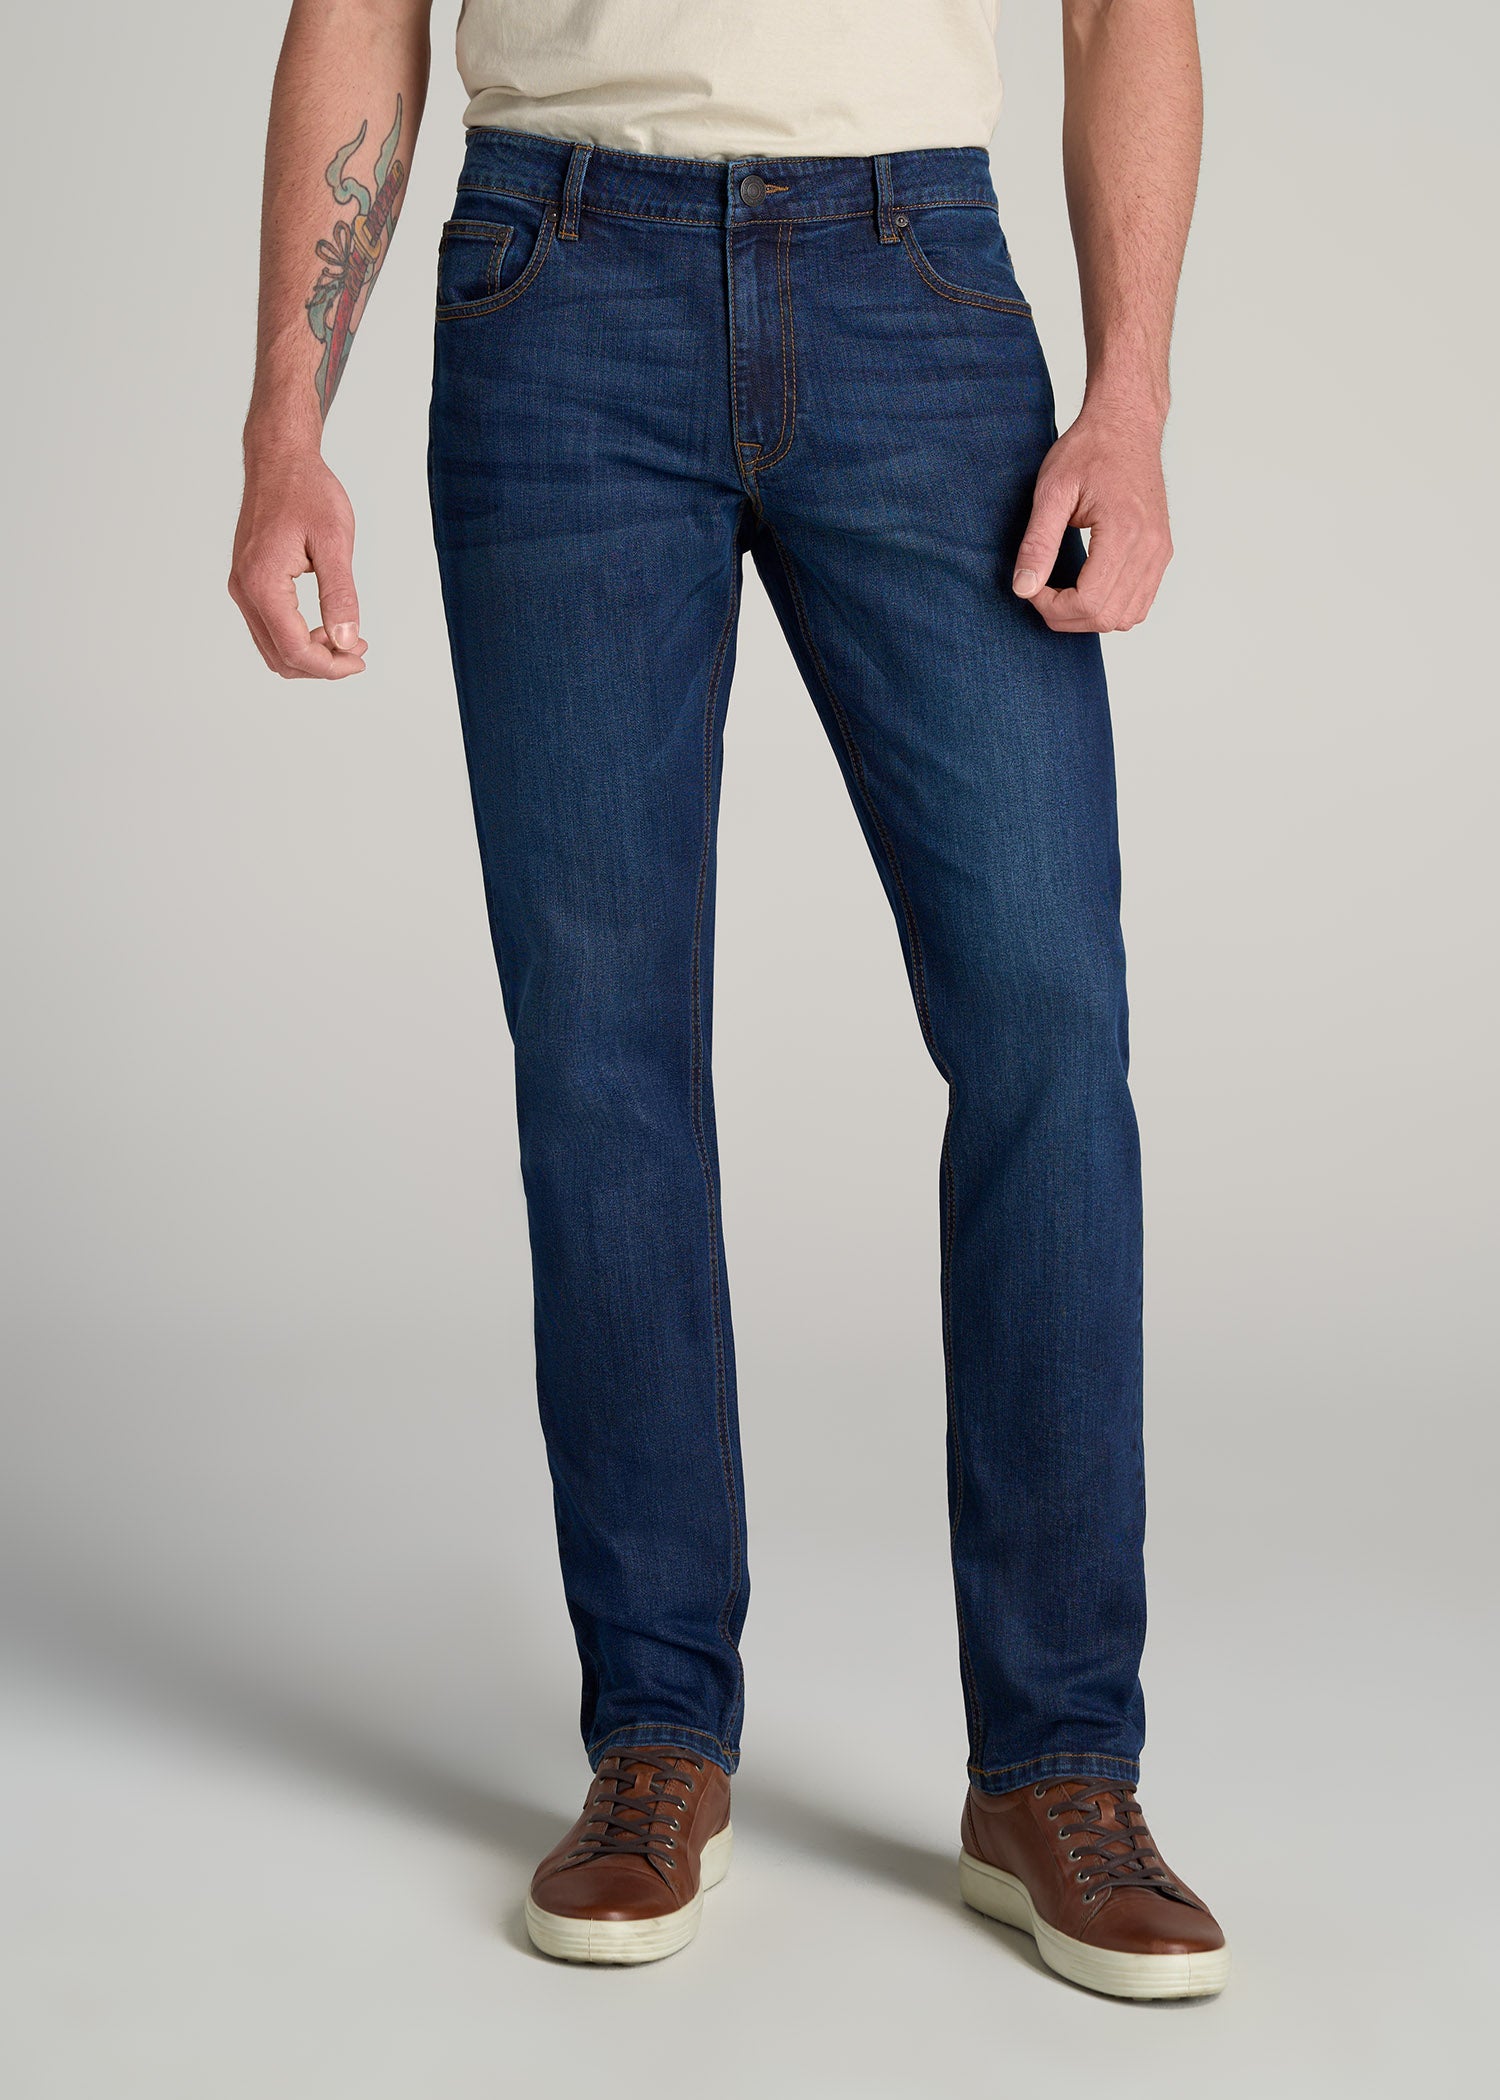 Fit Men\'s Charger Jeans Blue Taper Slim – Tall Carman Slim Jeans: Taper American